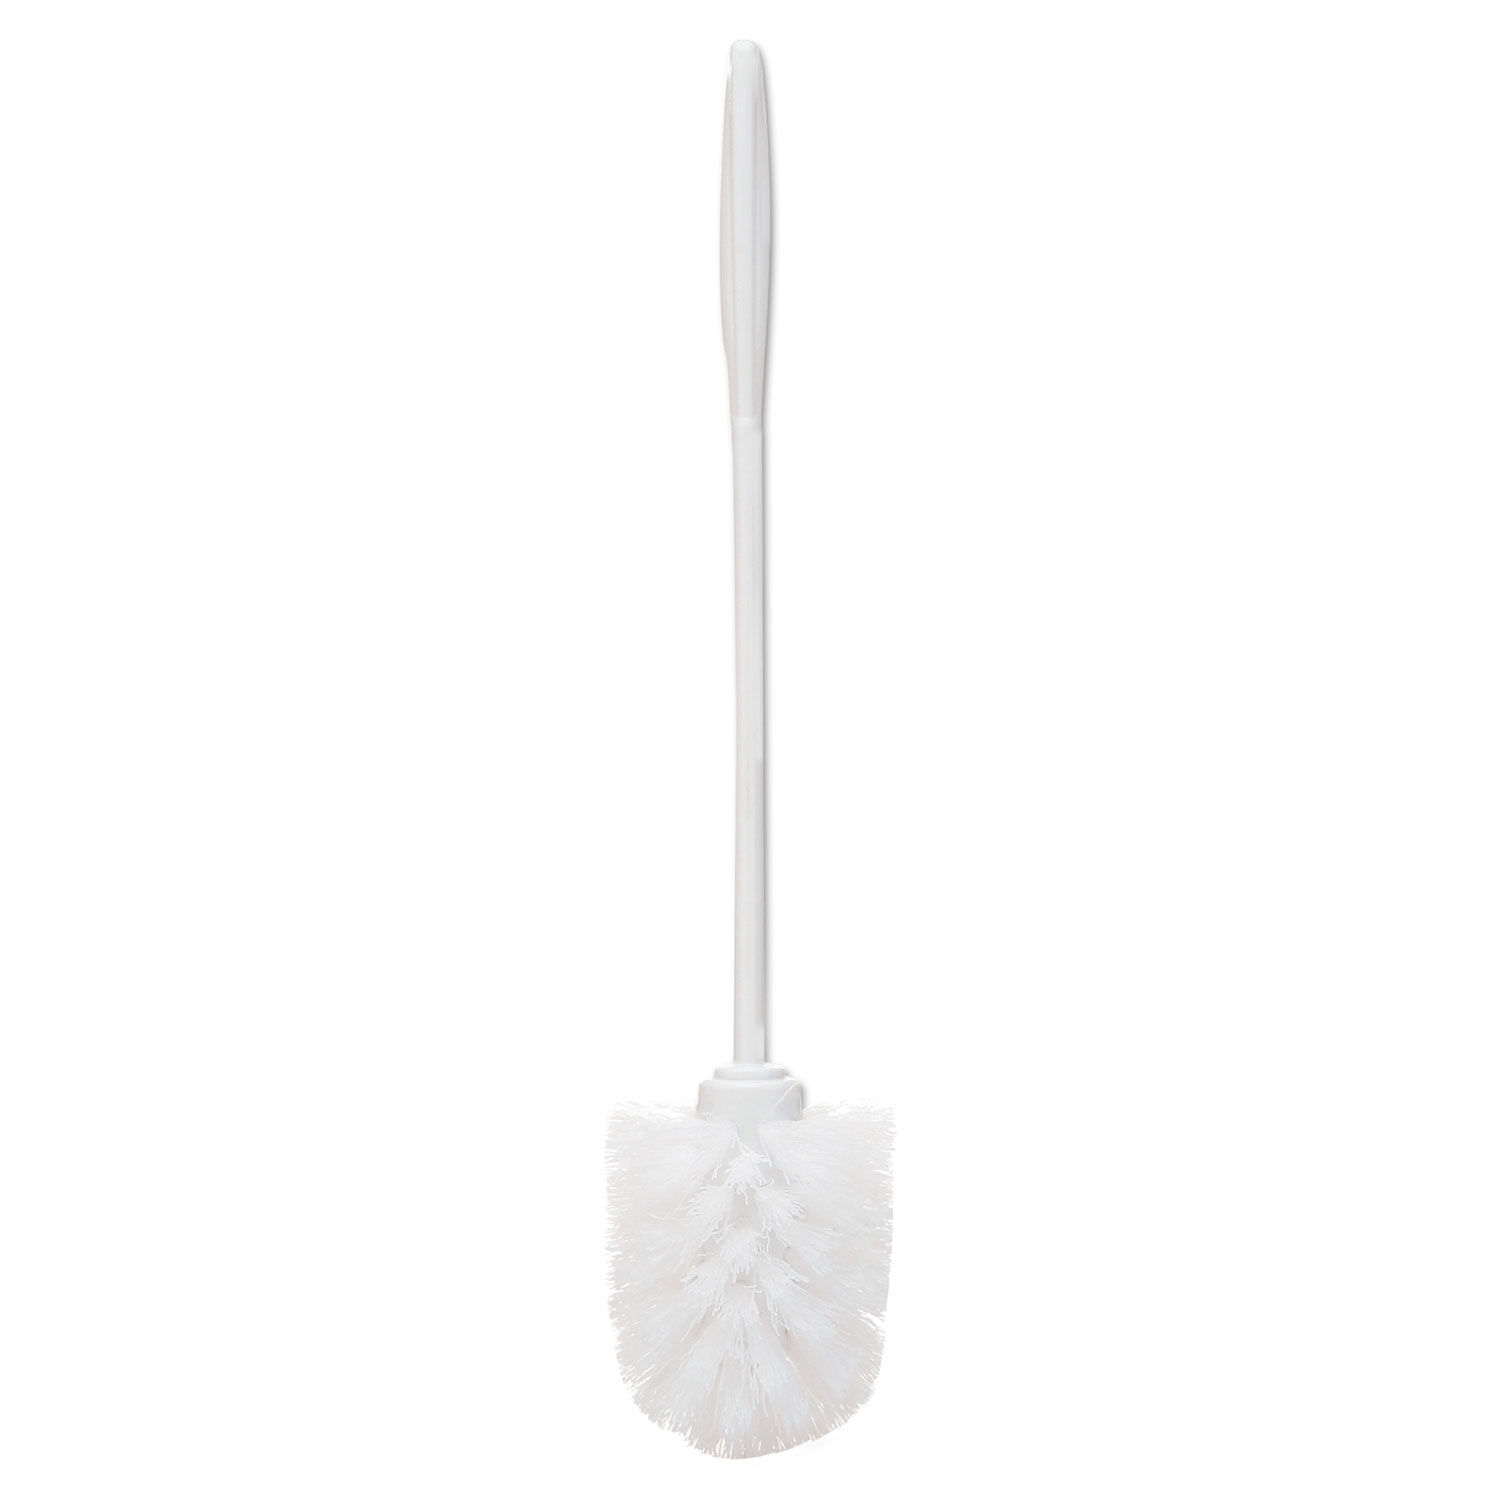 Rubbermaid Toilet Bowl Brush, 14 1/2, White, Plastic, RUB631000WE